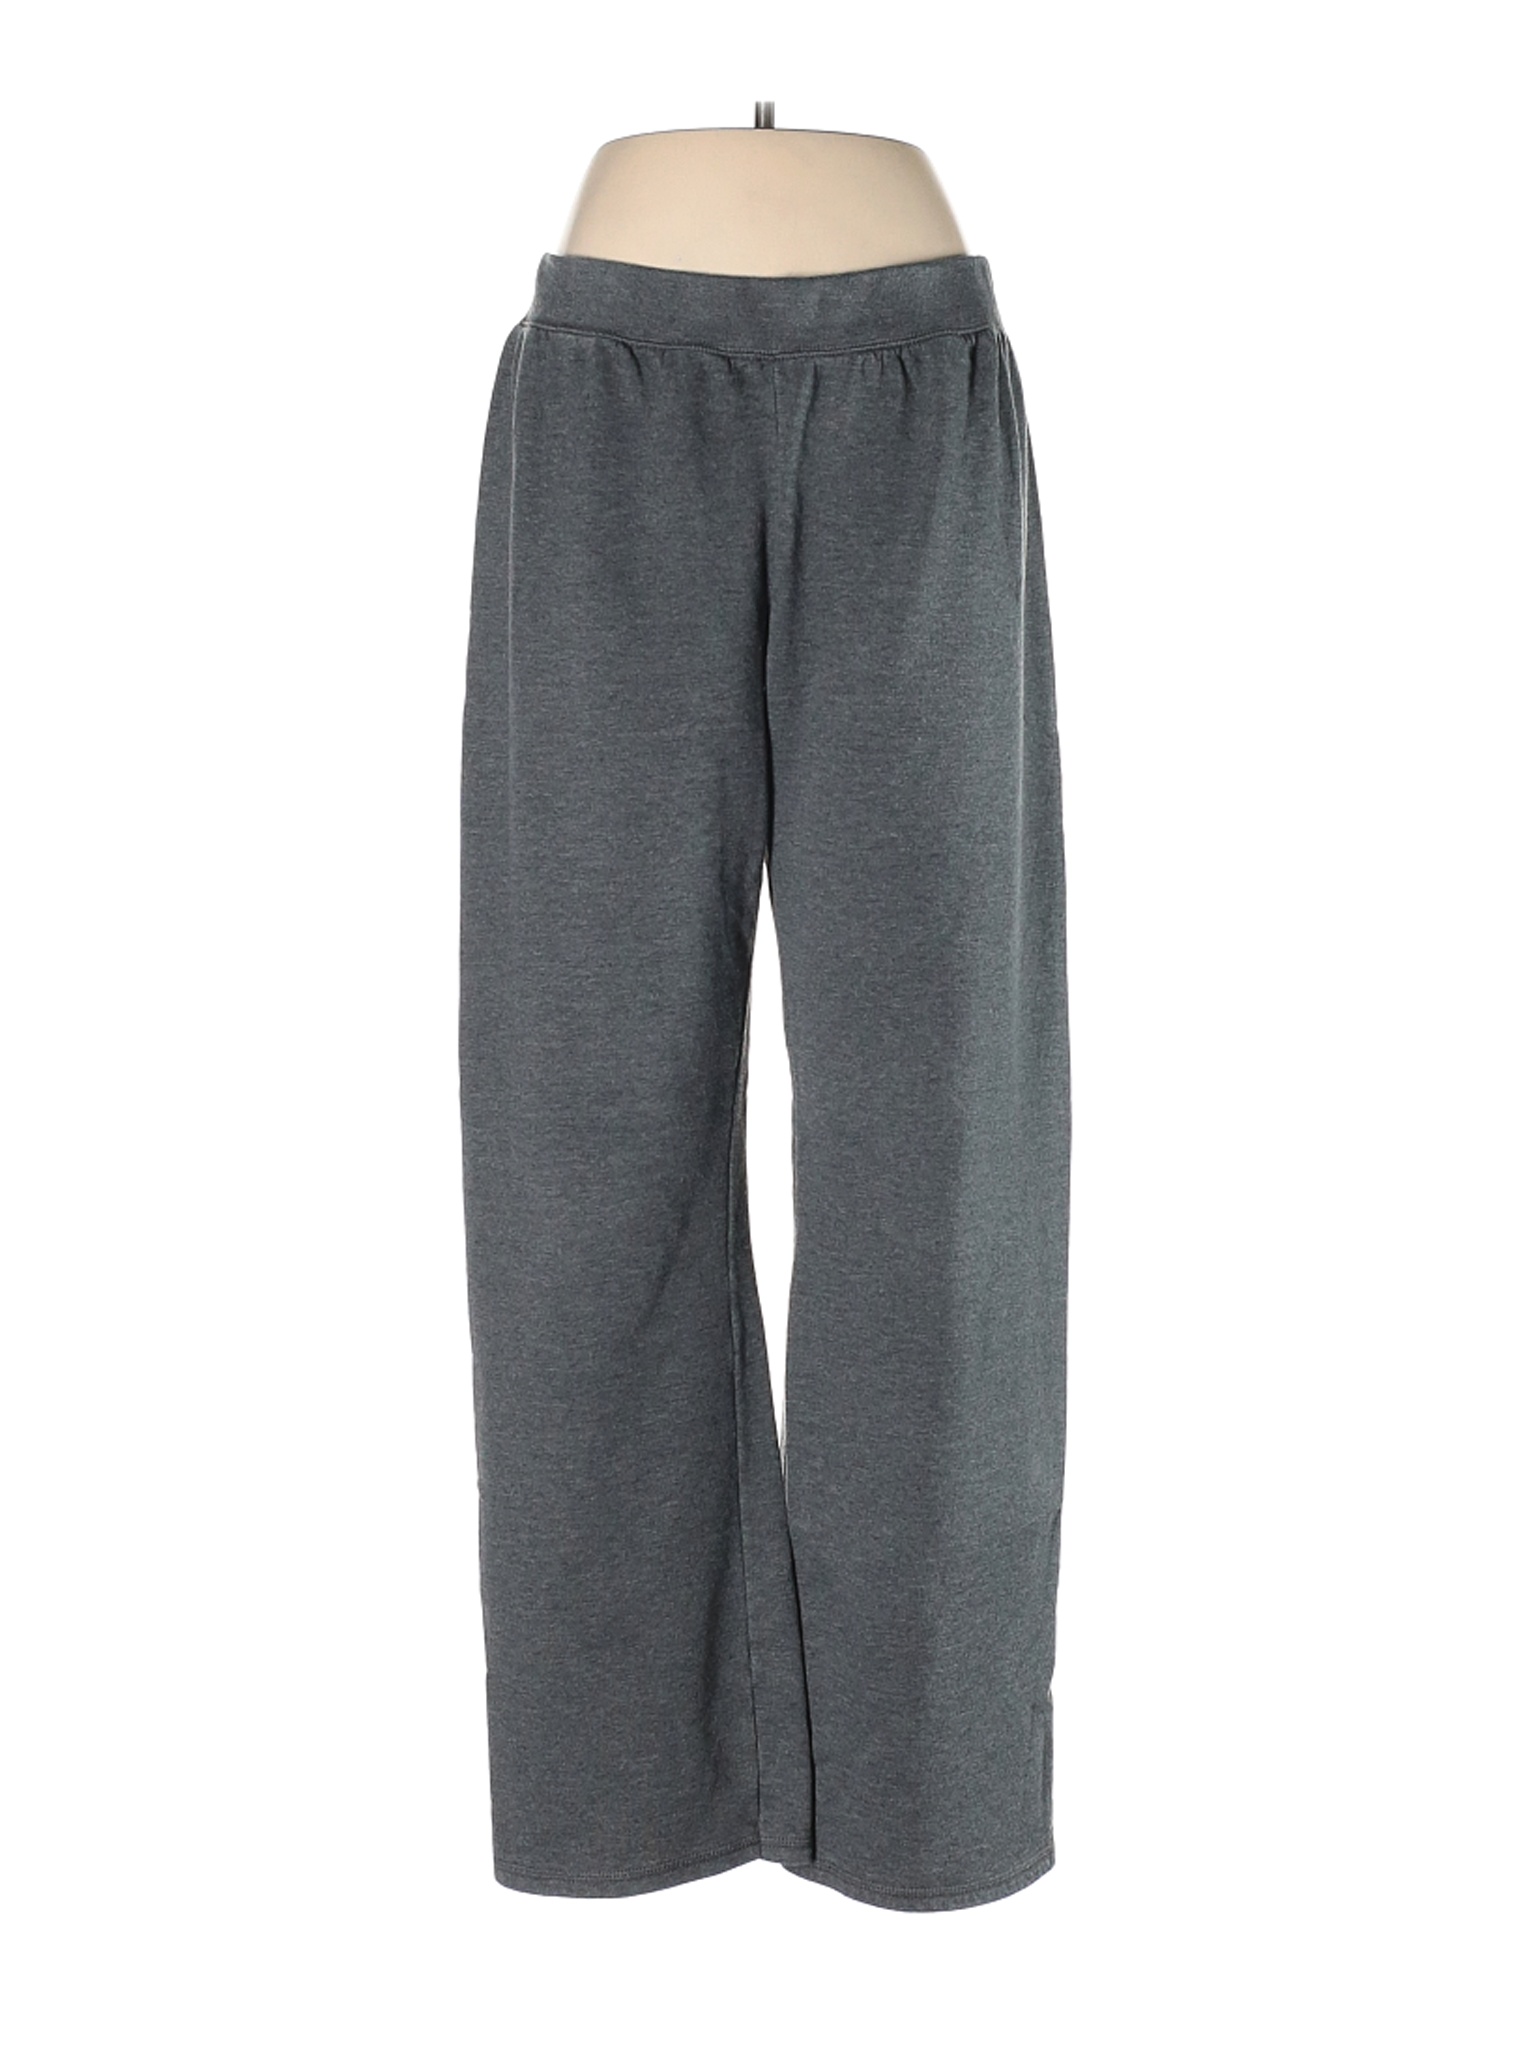 Hanes Women Gray Sweatpants M | eBay